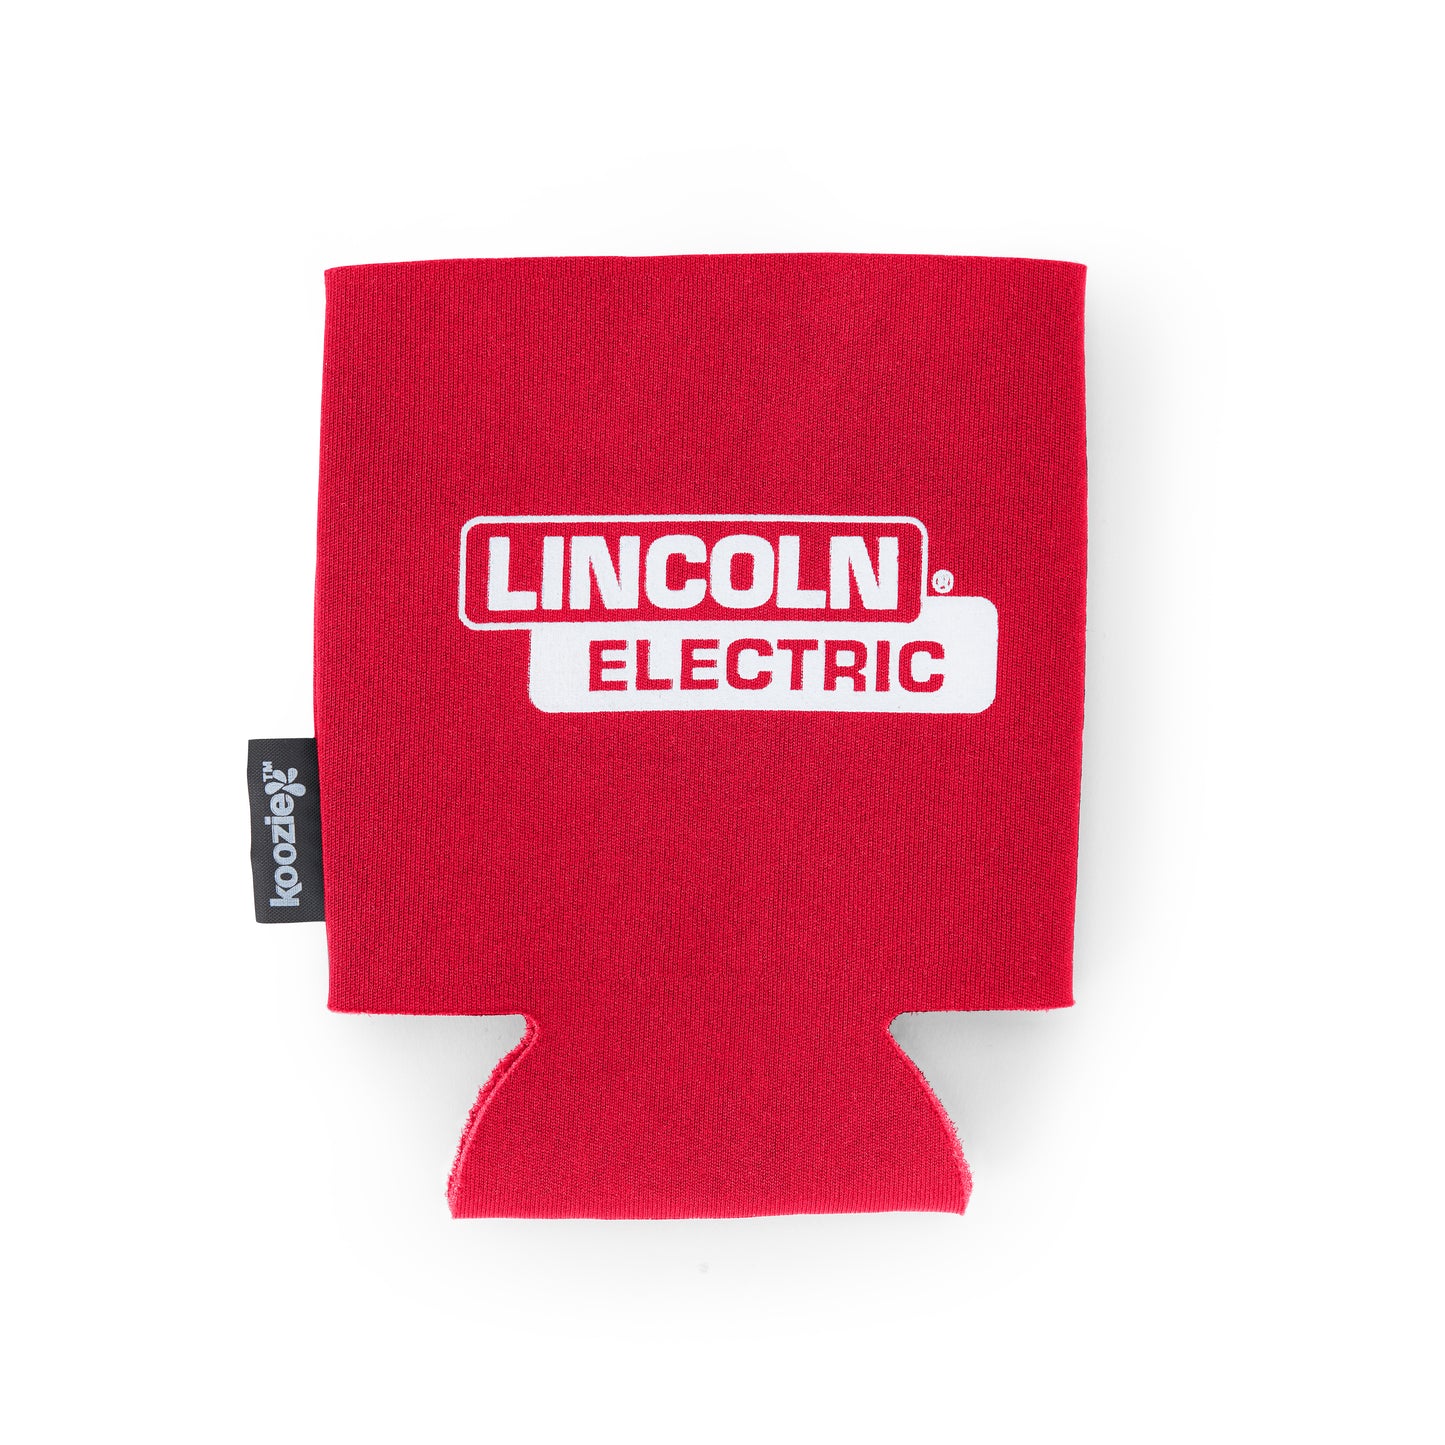 Lincoln Electric Koozie